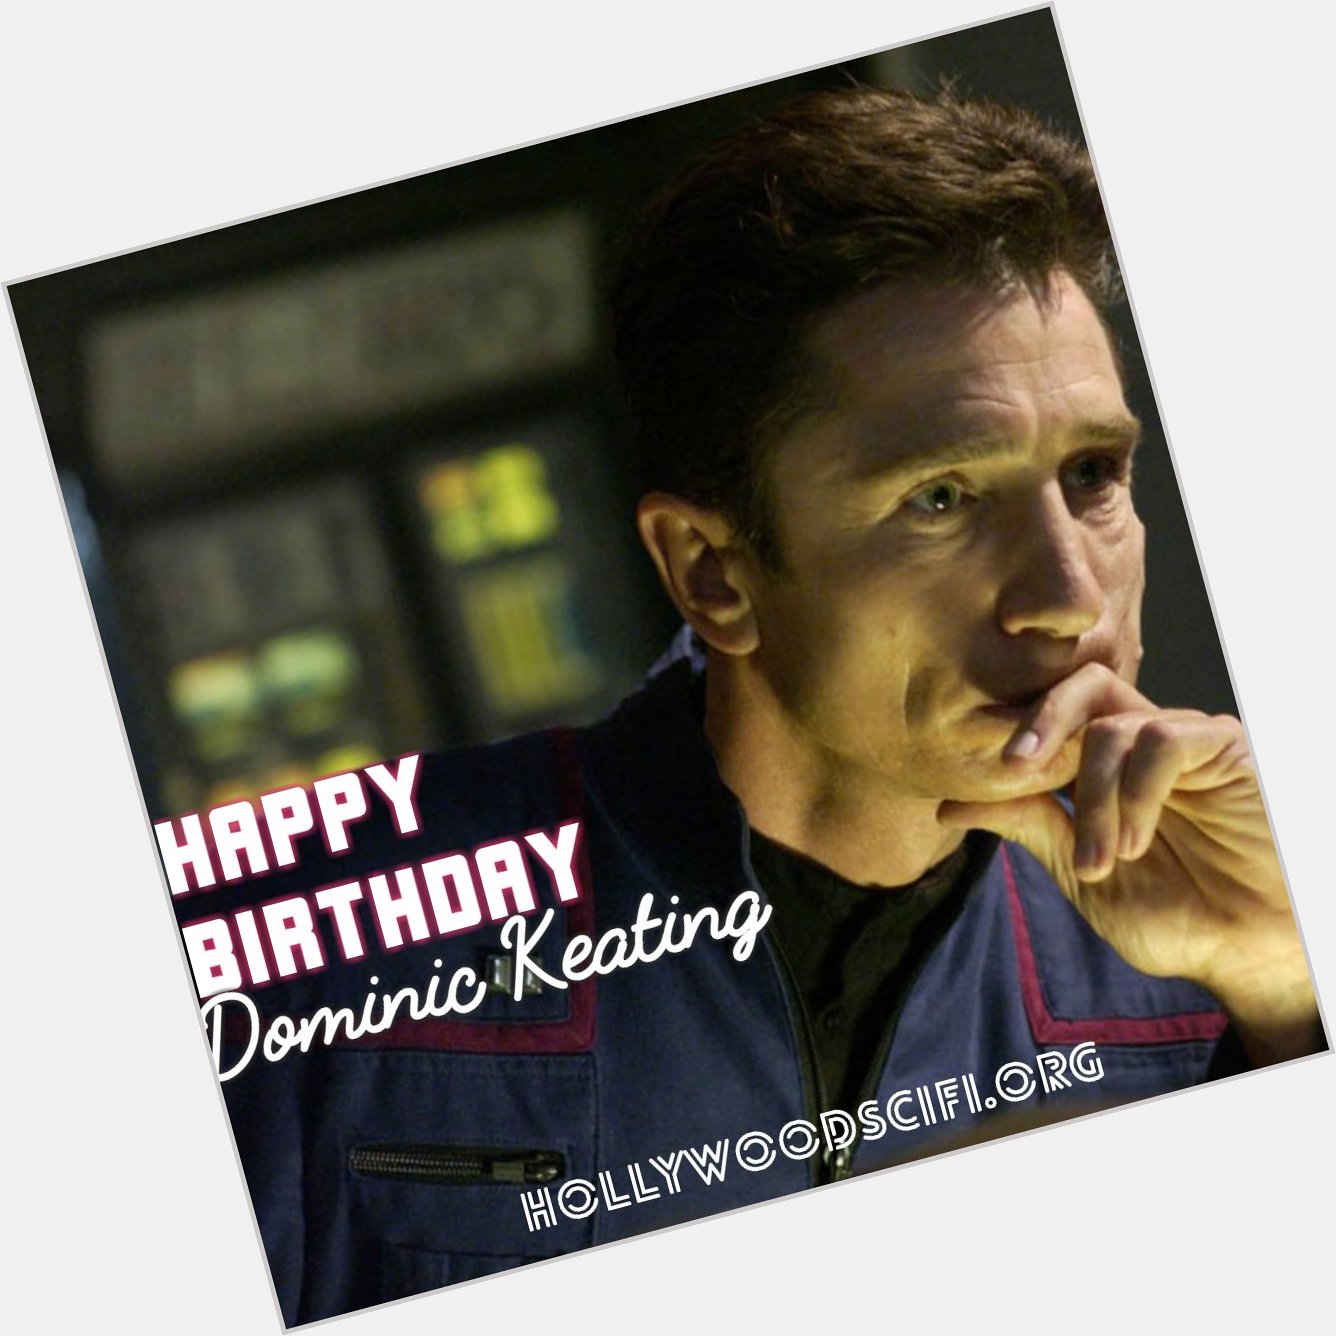 Happy Birthday to Dominic Keating!   